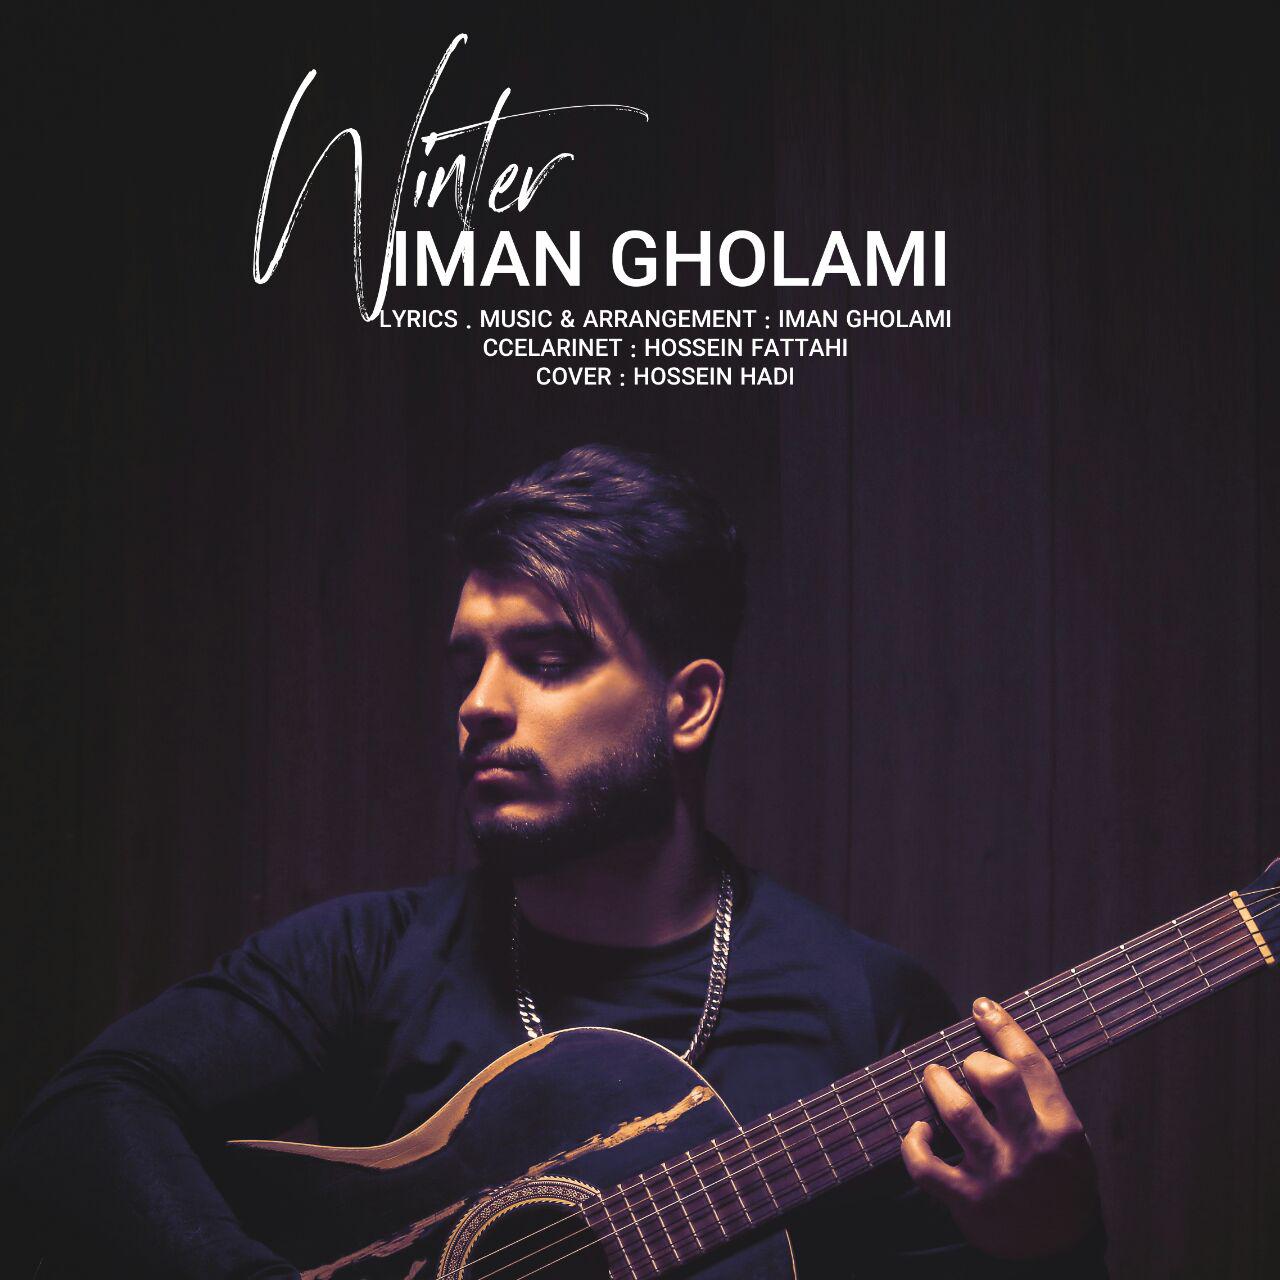  دانلود آهنگ جدید ایمان غلامی - زمستون | Download New Music By Iman Gholami - Zemestoon